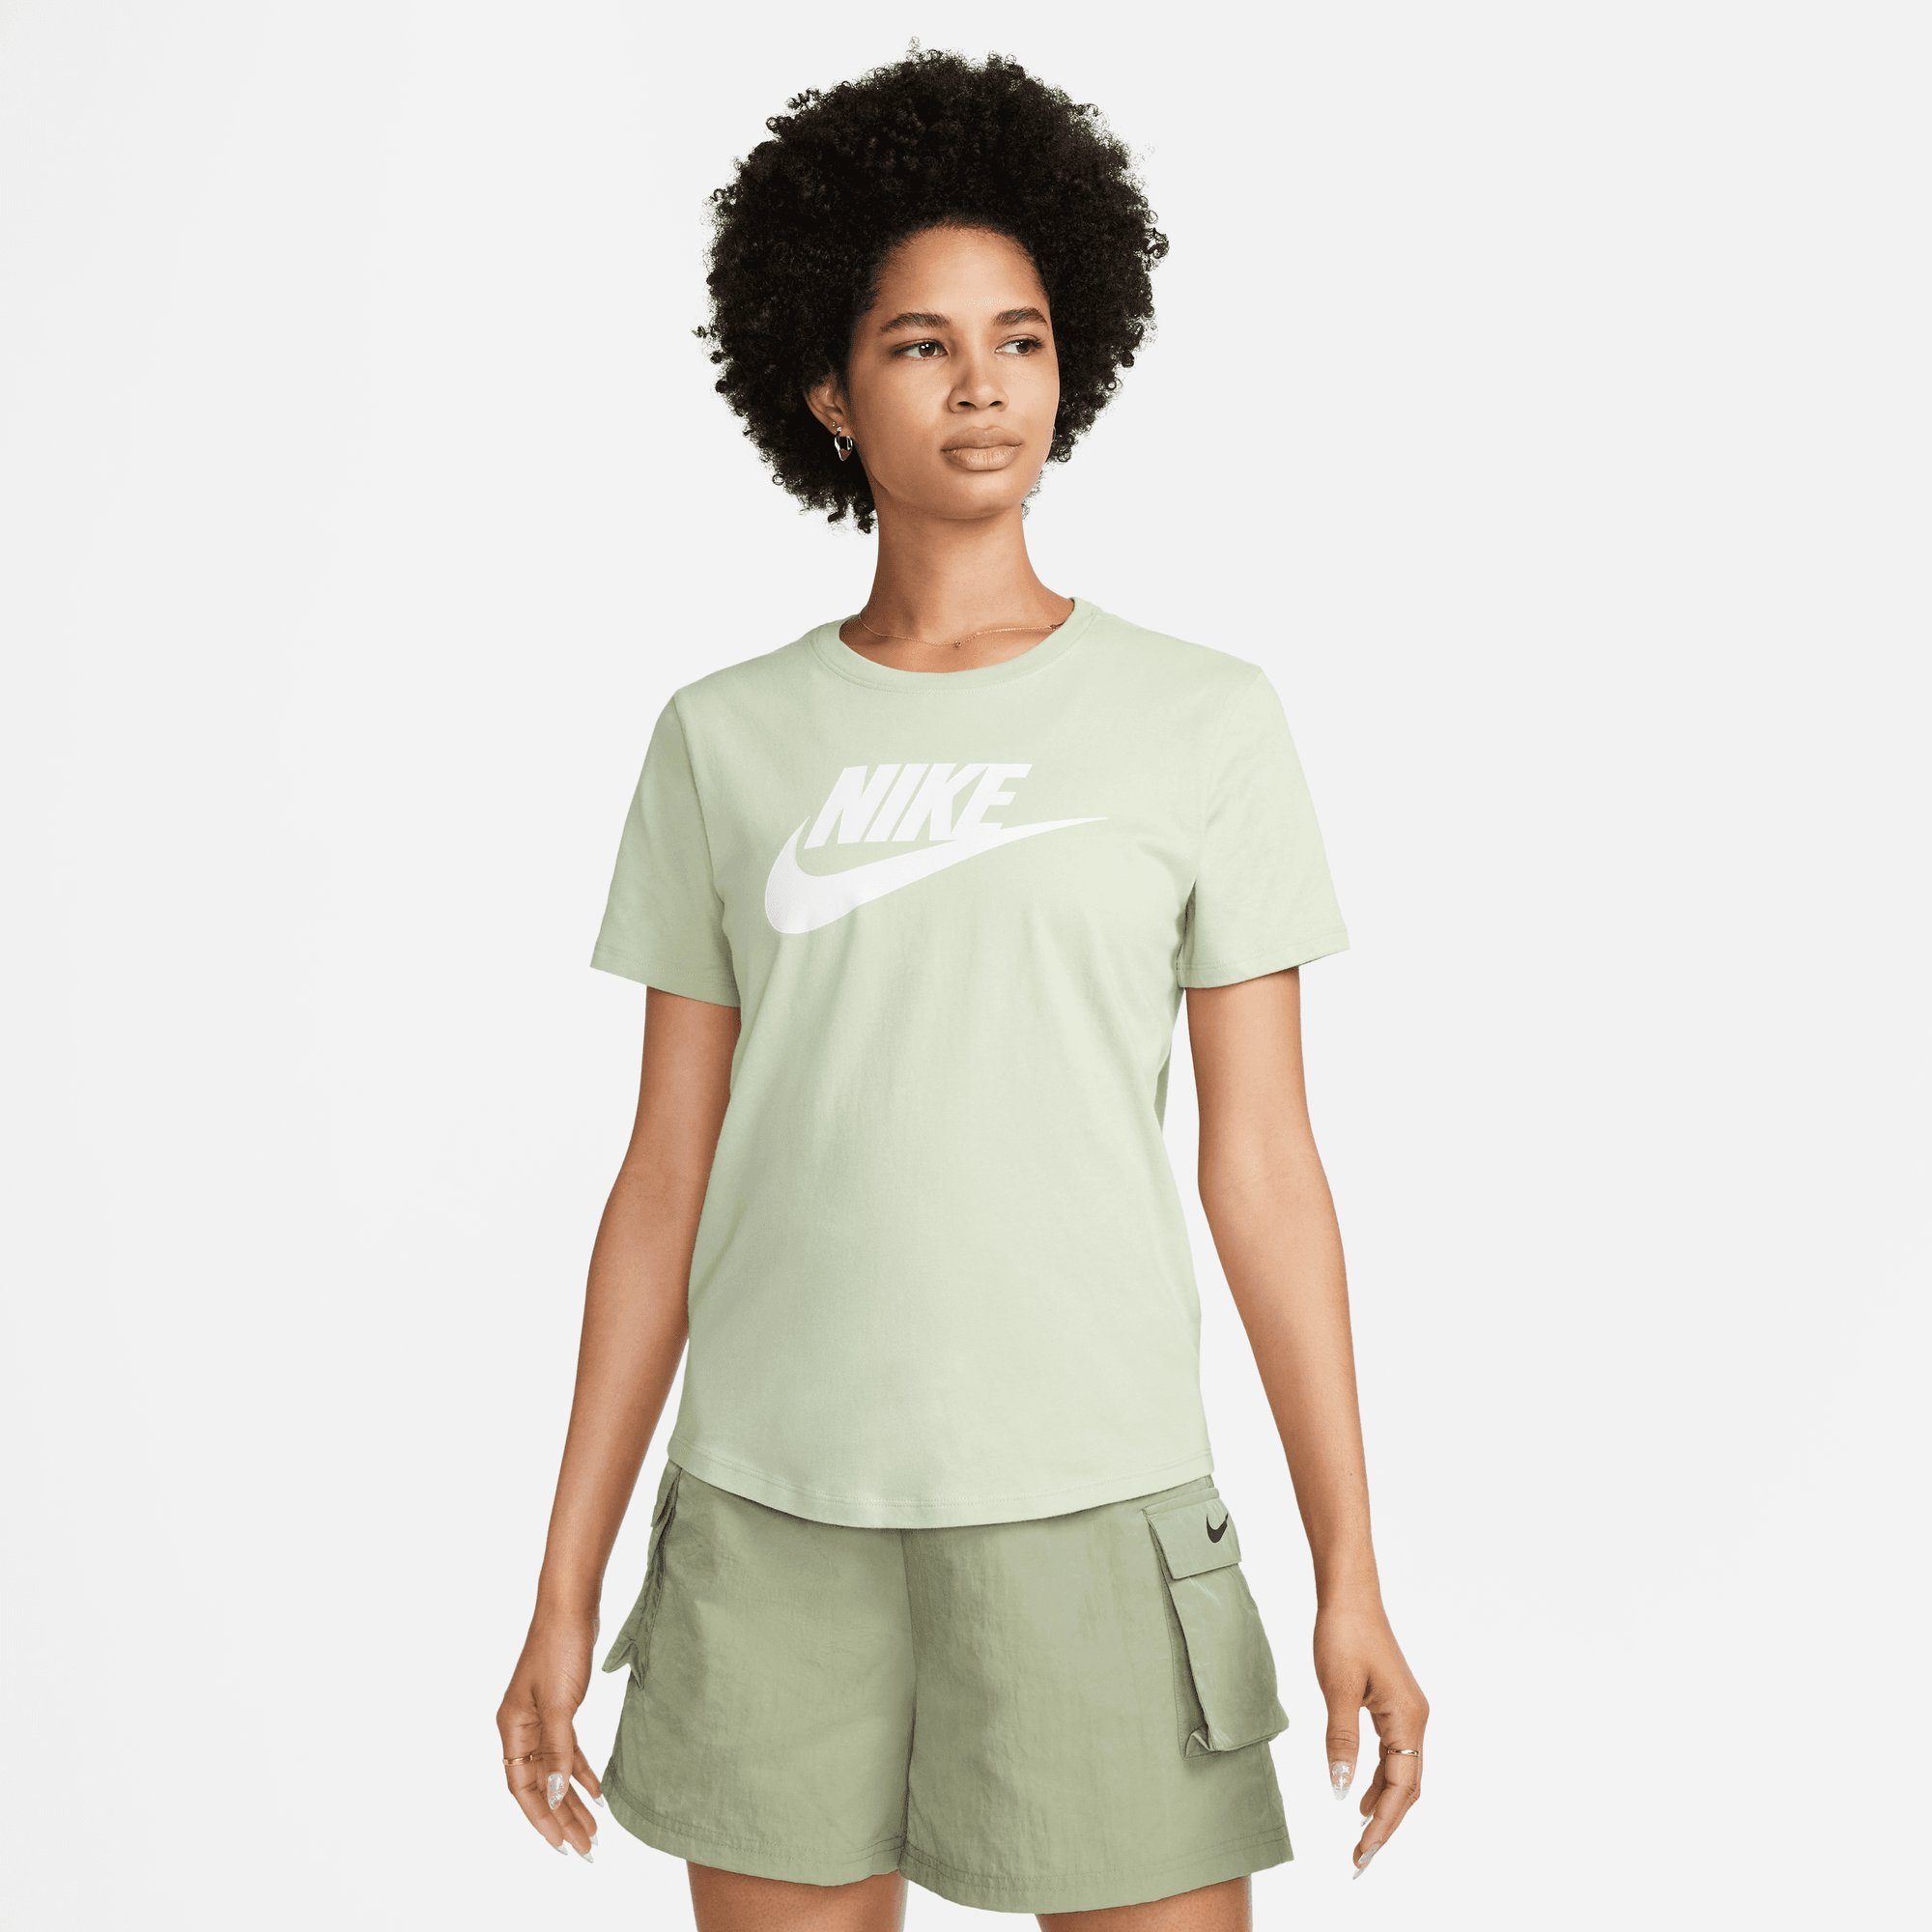 HONEYDEW/WHITE Sportswear Nike T-SHIRT ESSENTIALS WOMEN'S T-Shirt LOGO